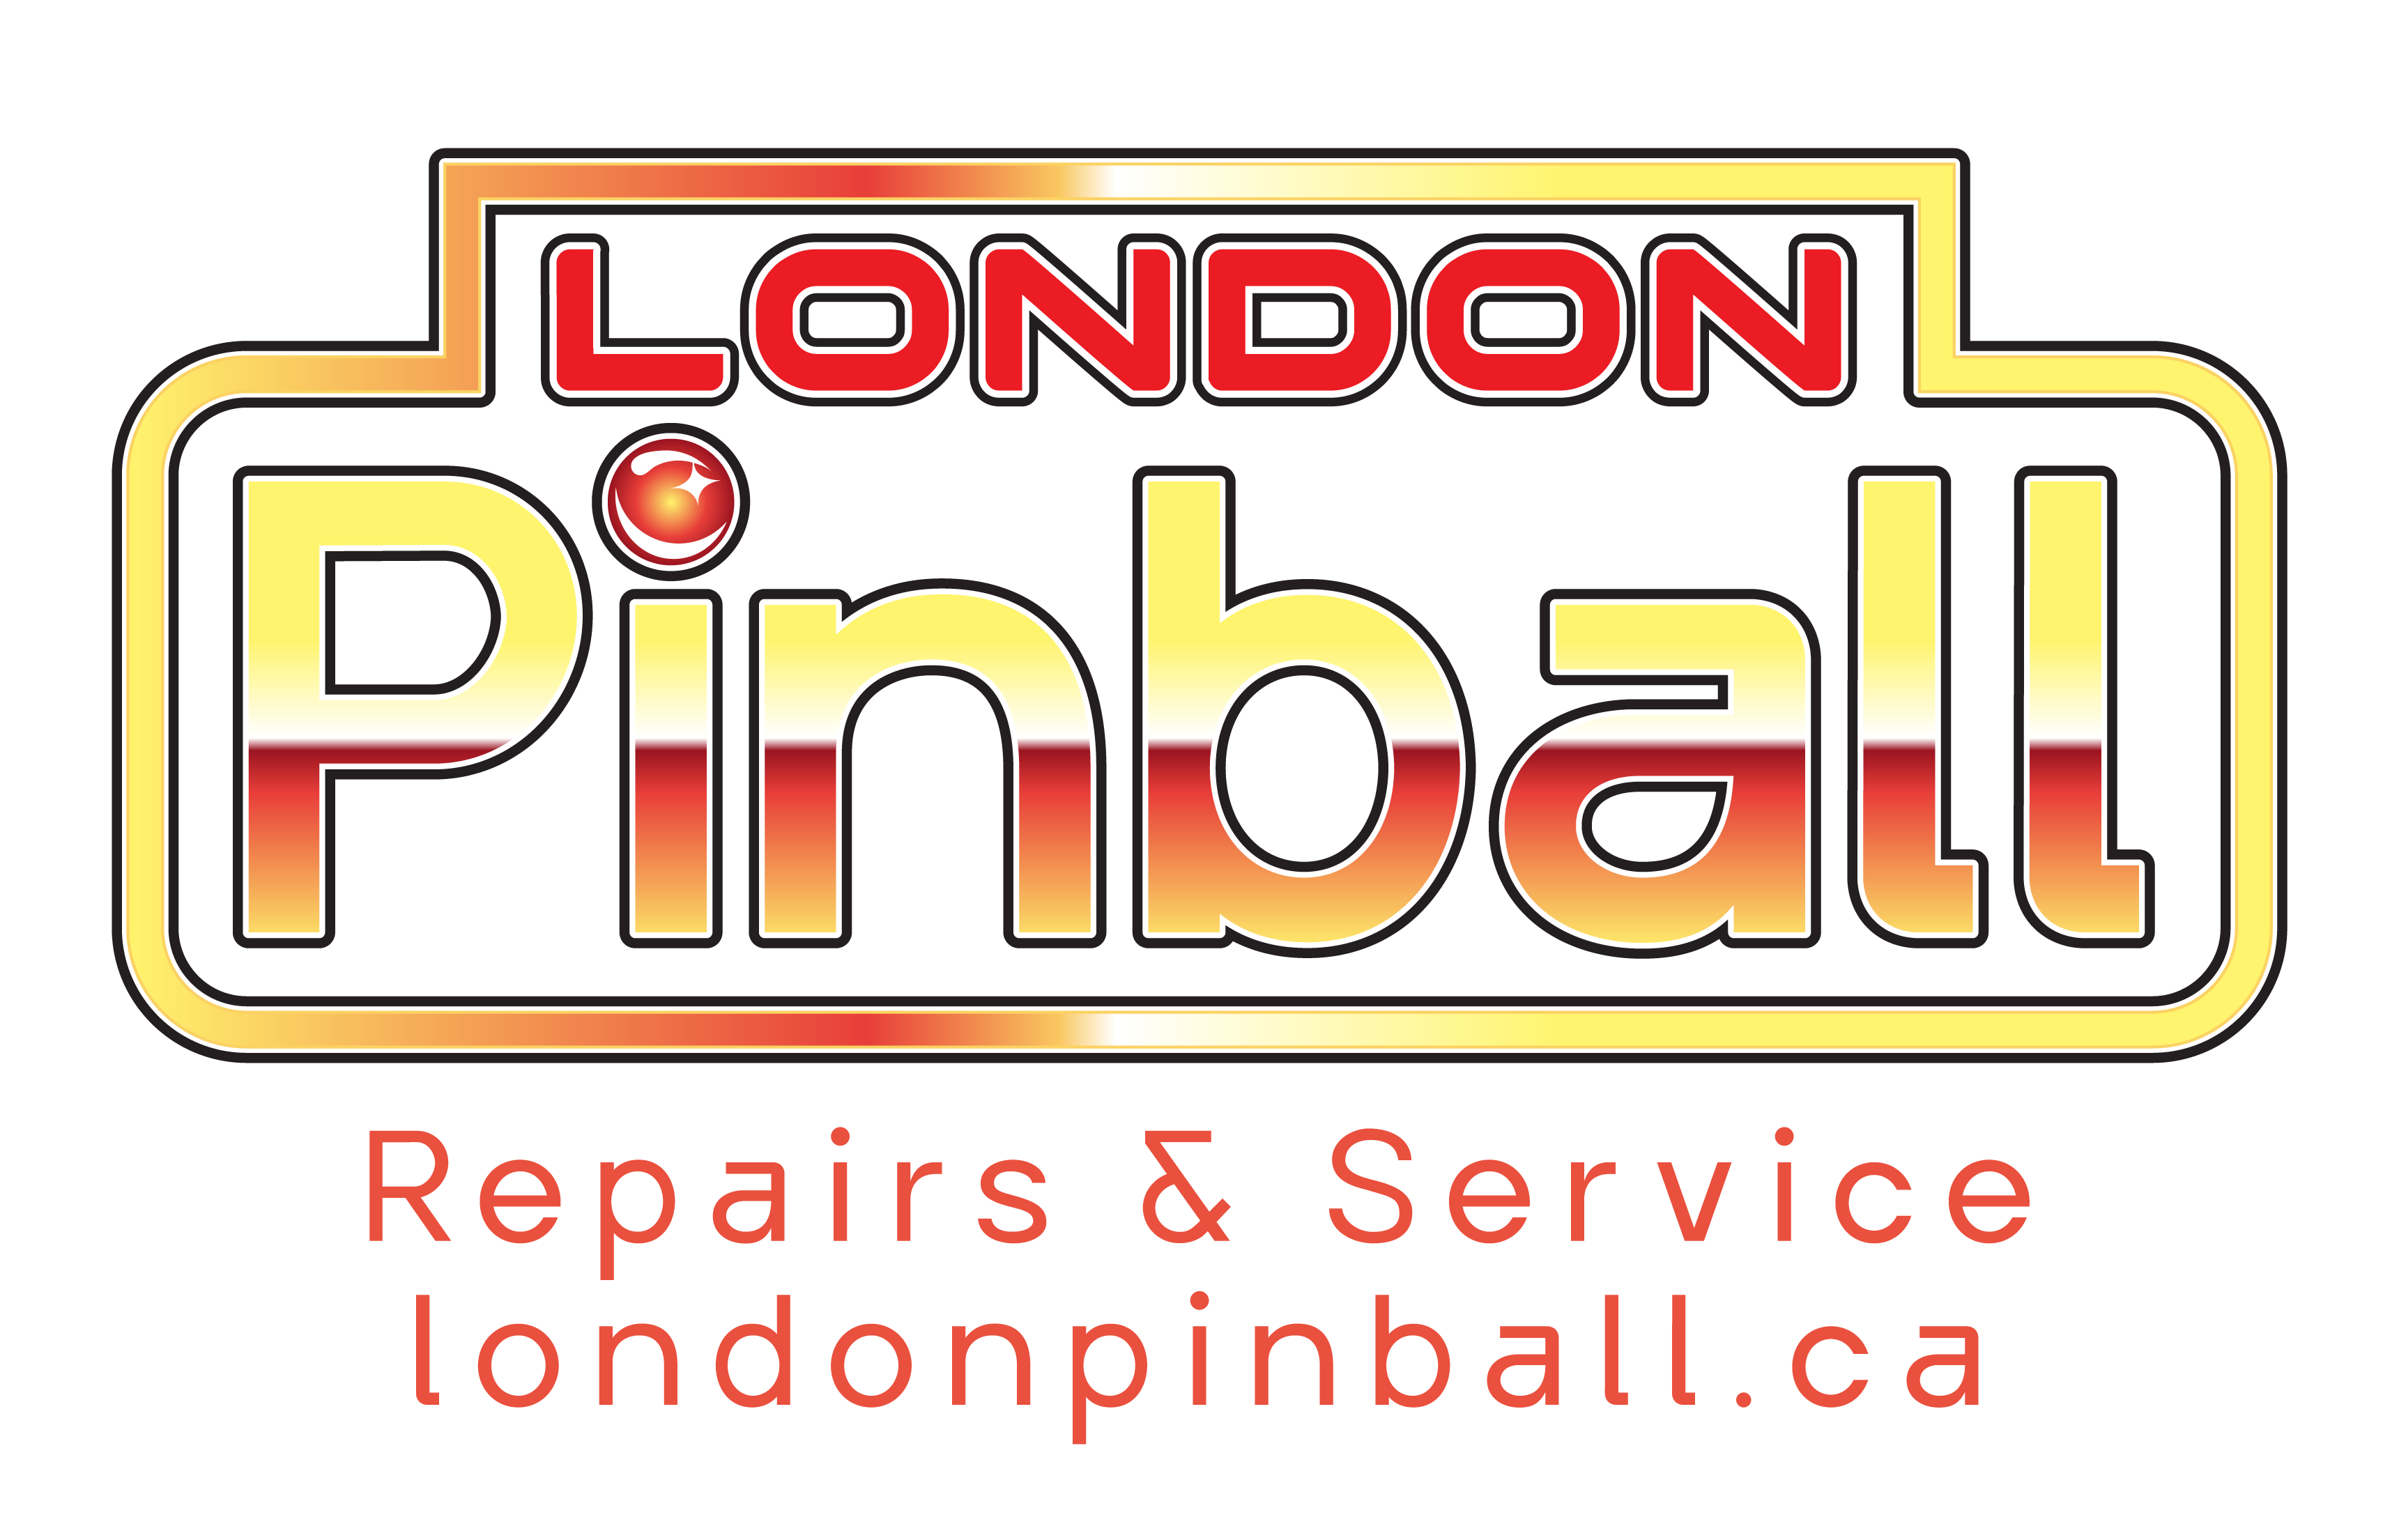 London Pinball